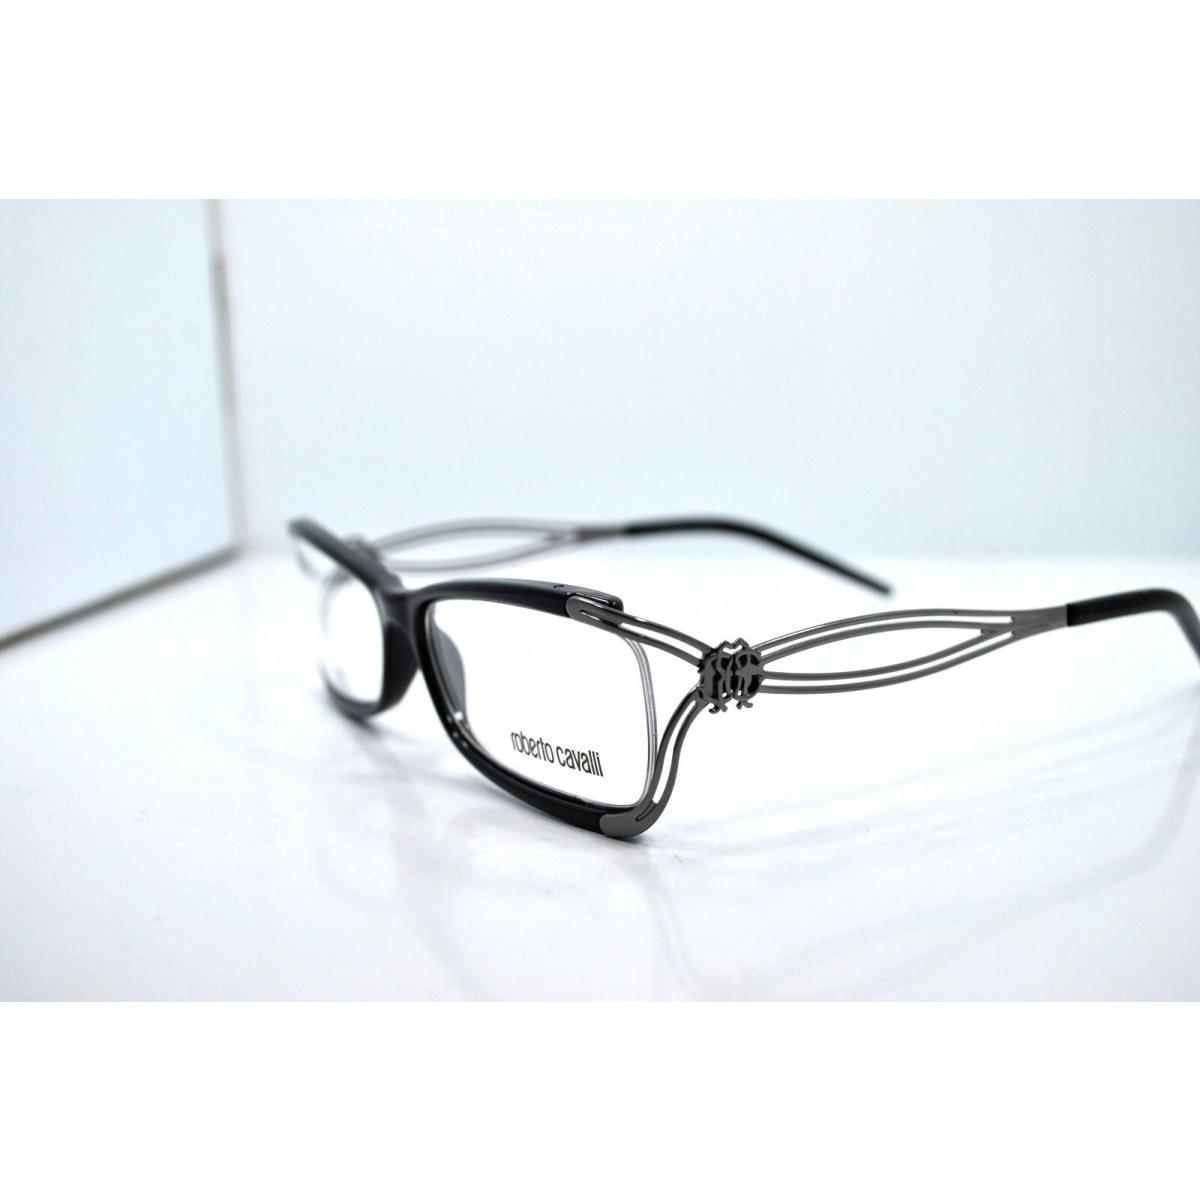 Roberto Cavalli Caneeella 635 001 Eyeglasses Frame